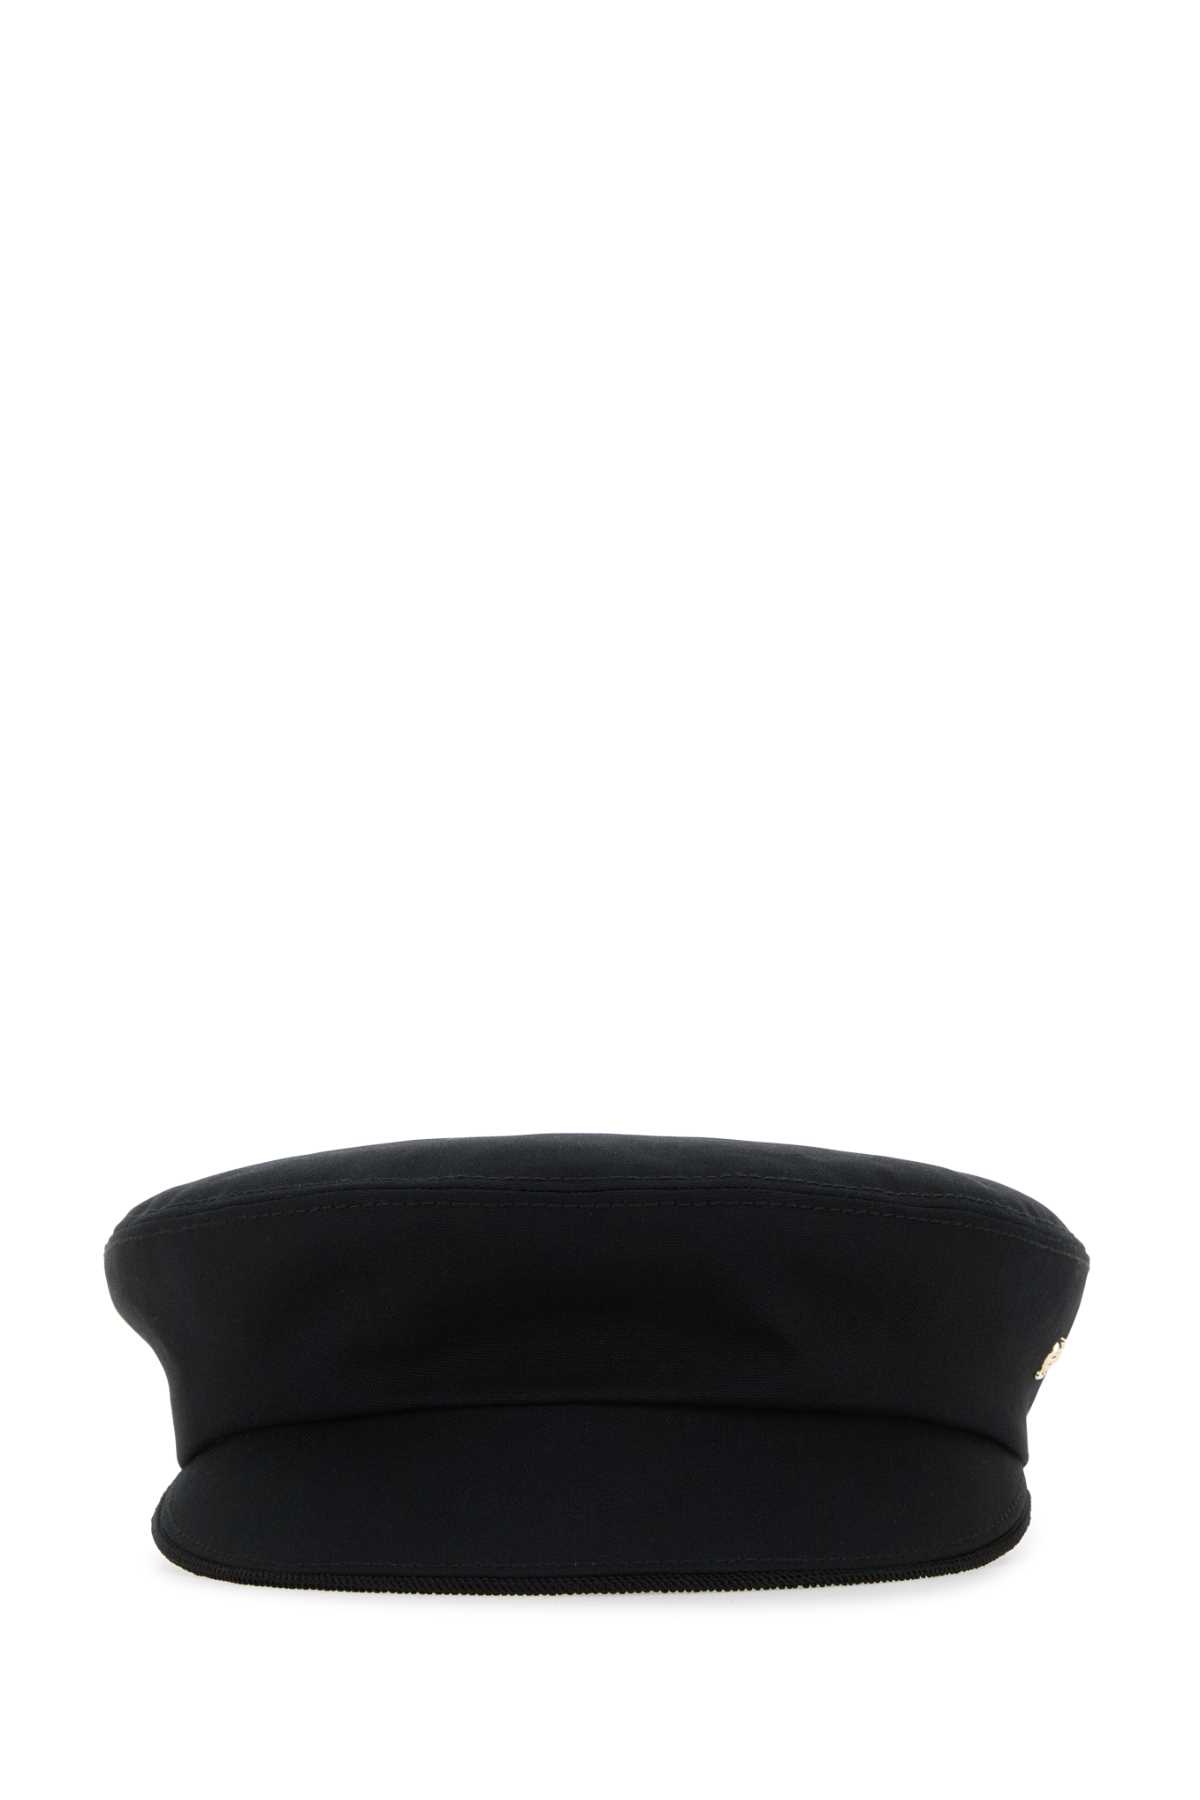 Shop Helen Kaminski Black Cotton Dali Hat